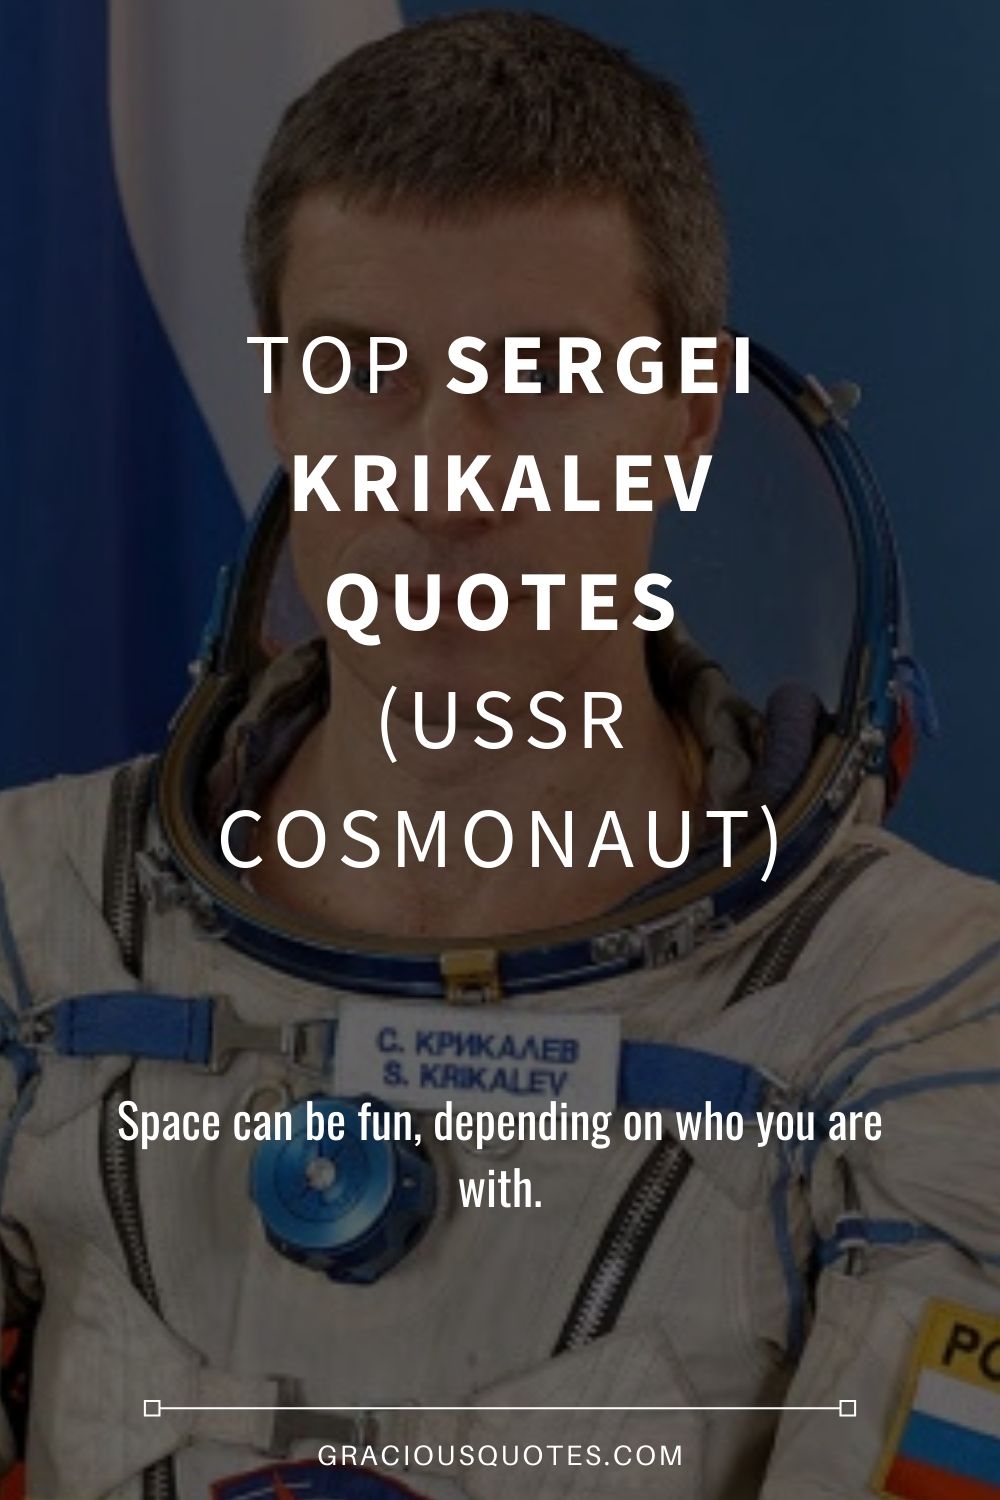 Top Sergei Krikalev Quotes (USSR COSMONAUT) - Gracious Quotes